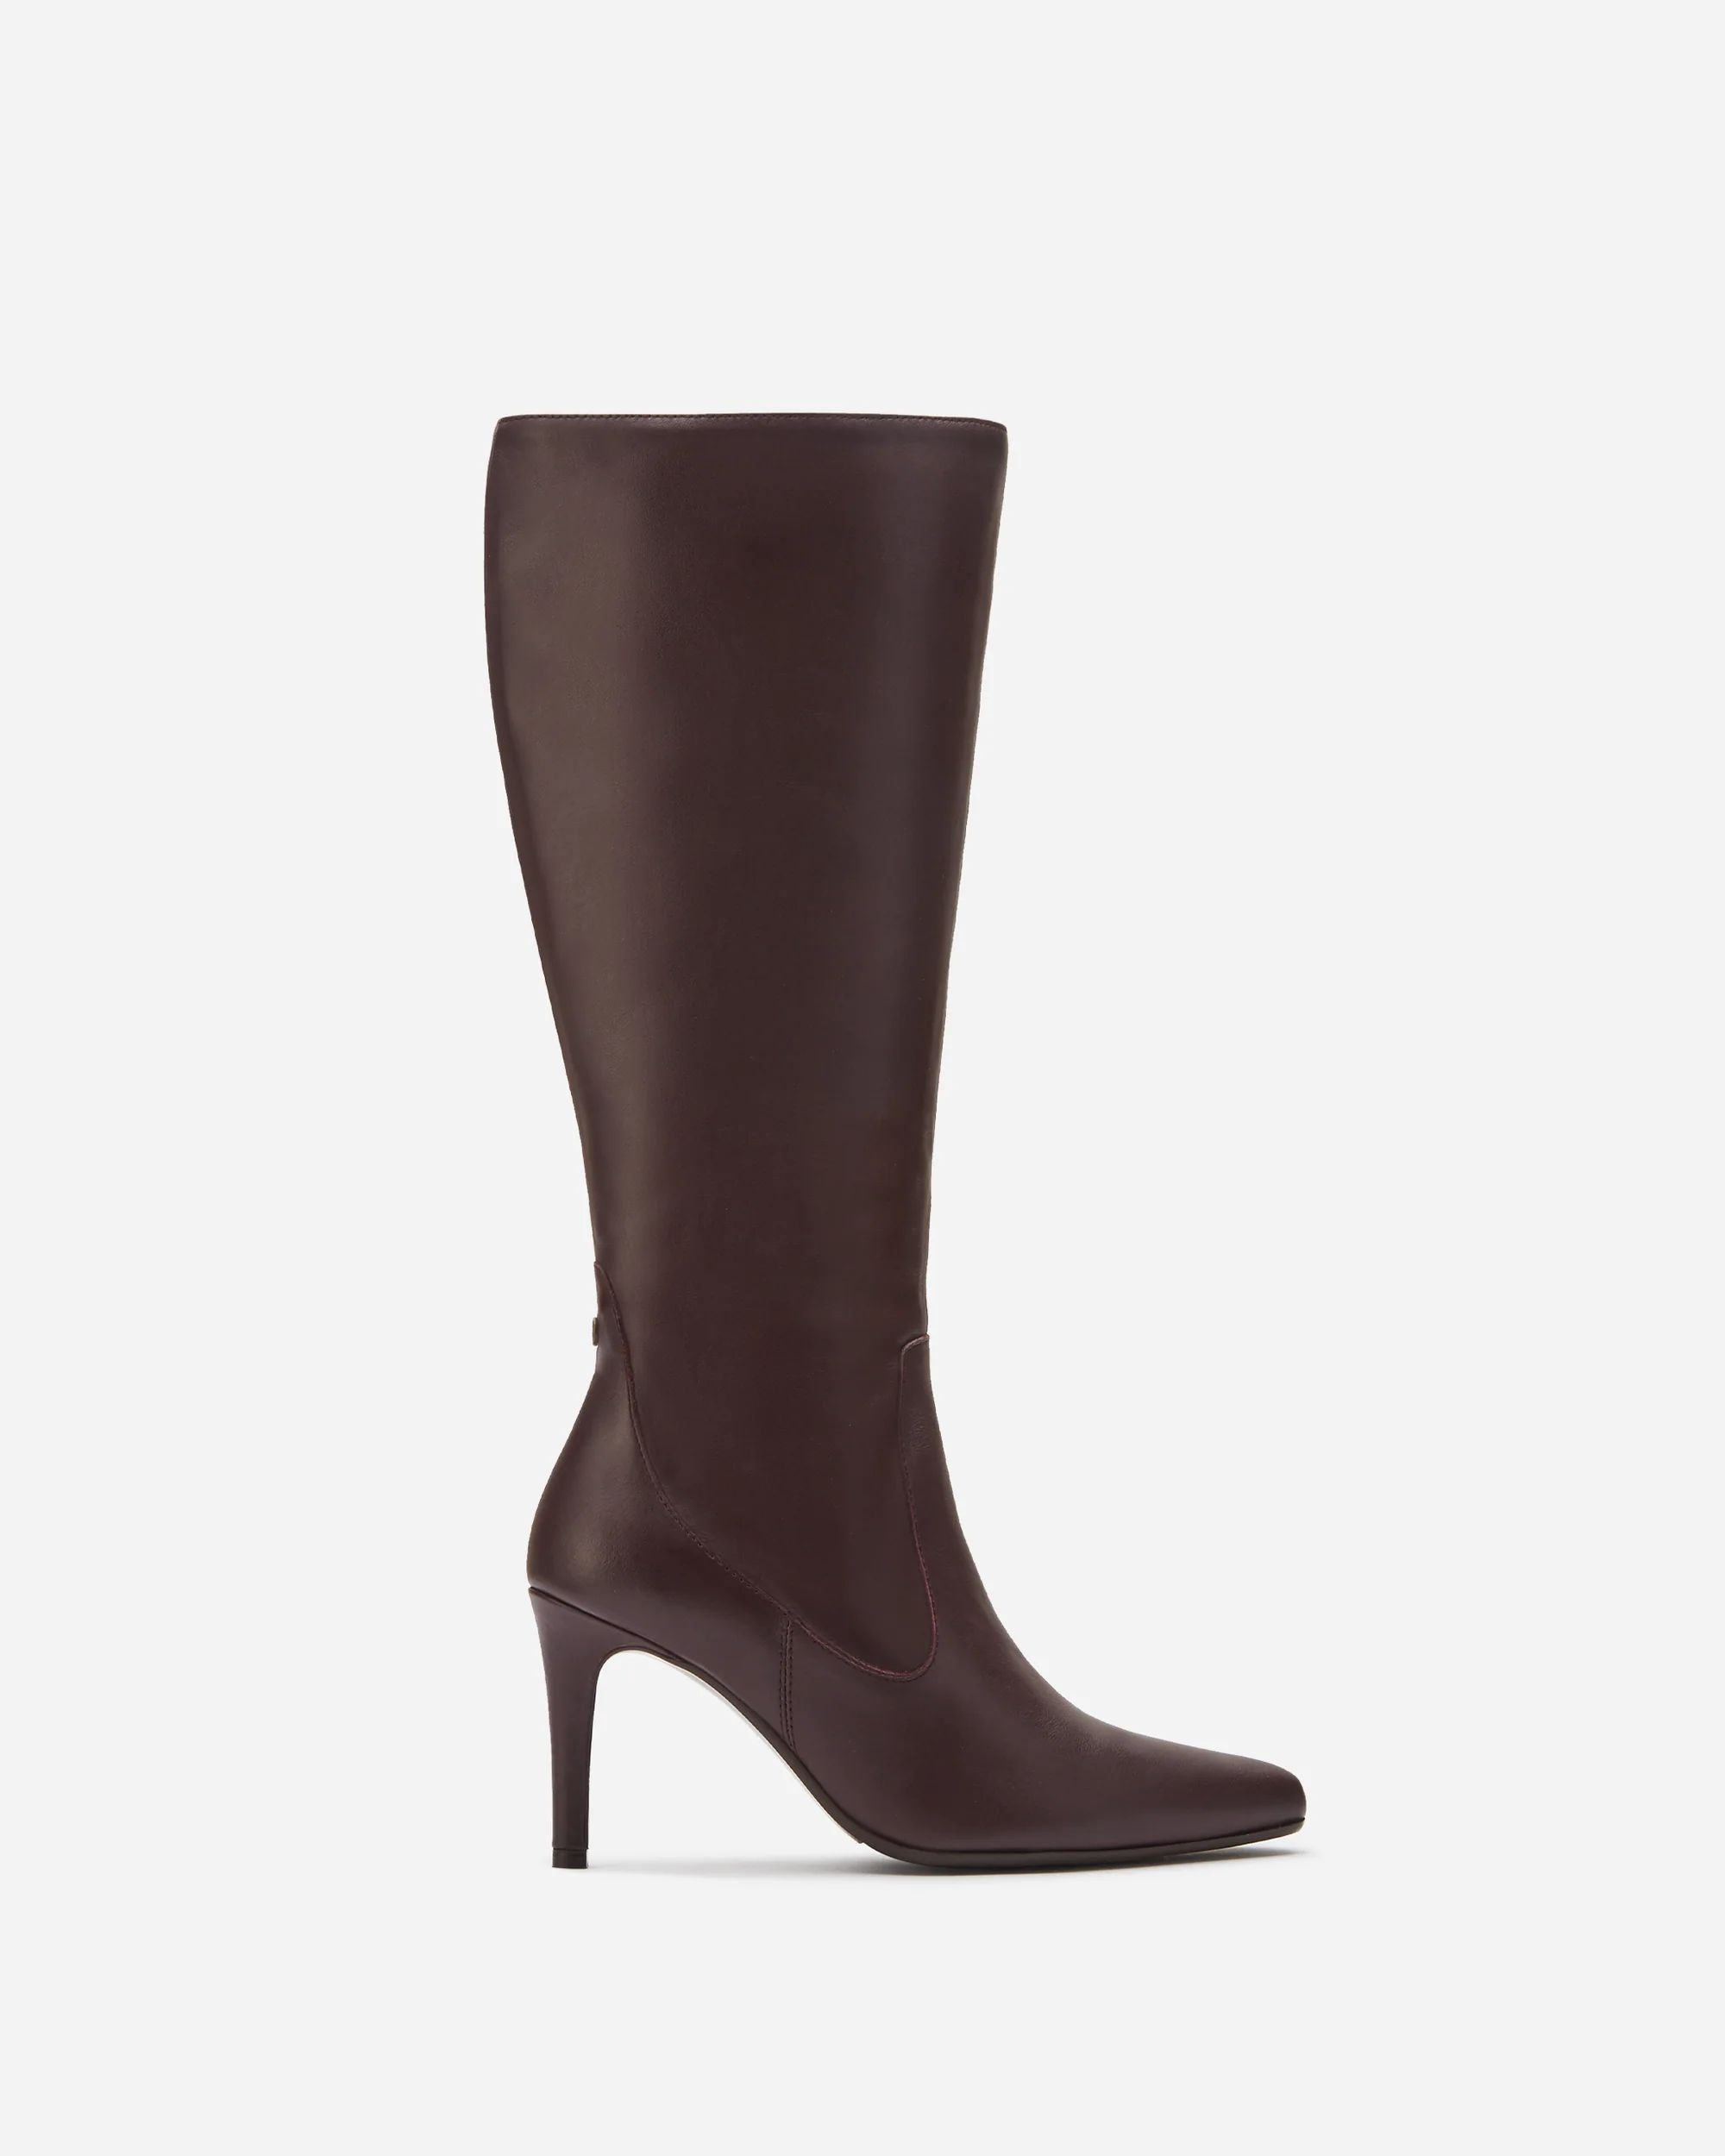 Freya Knee High Boots in Burgundy Leather | DuoBoots